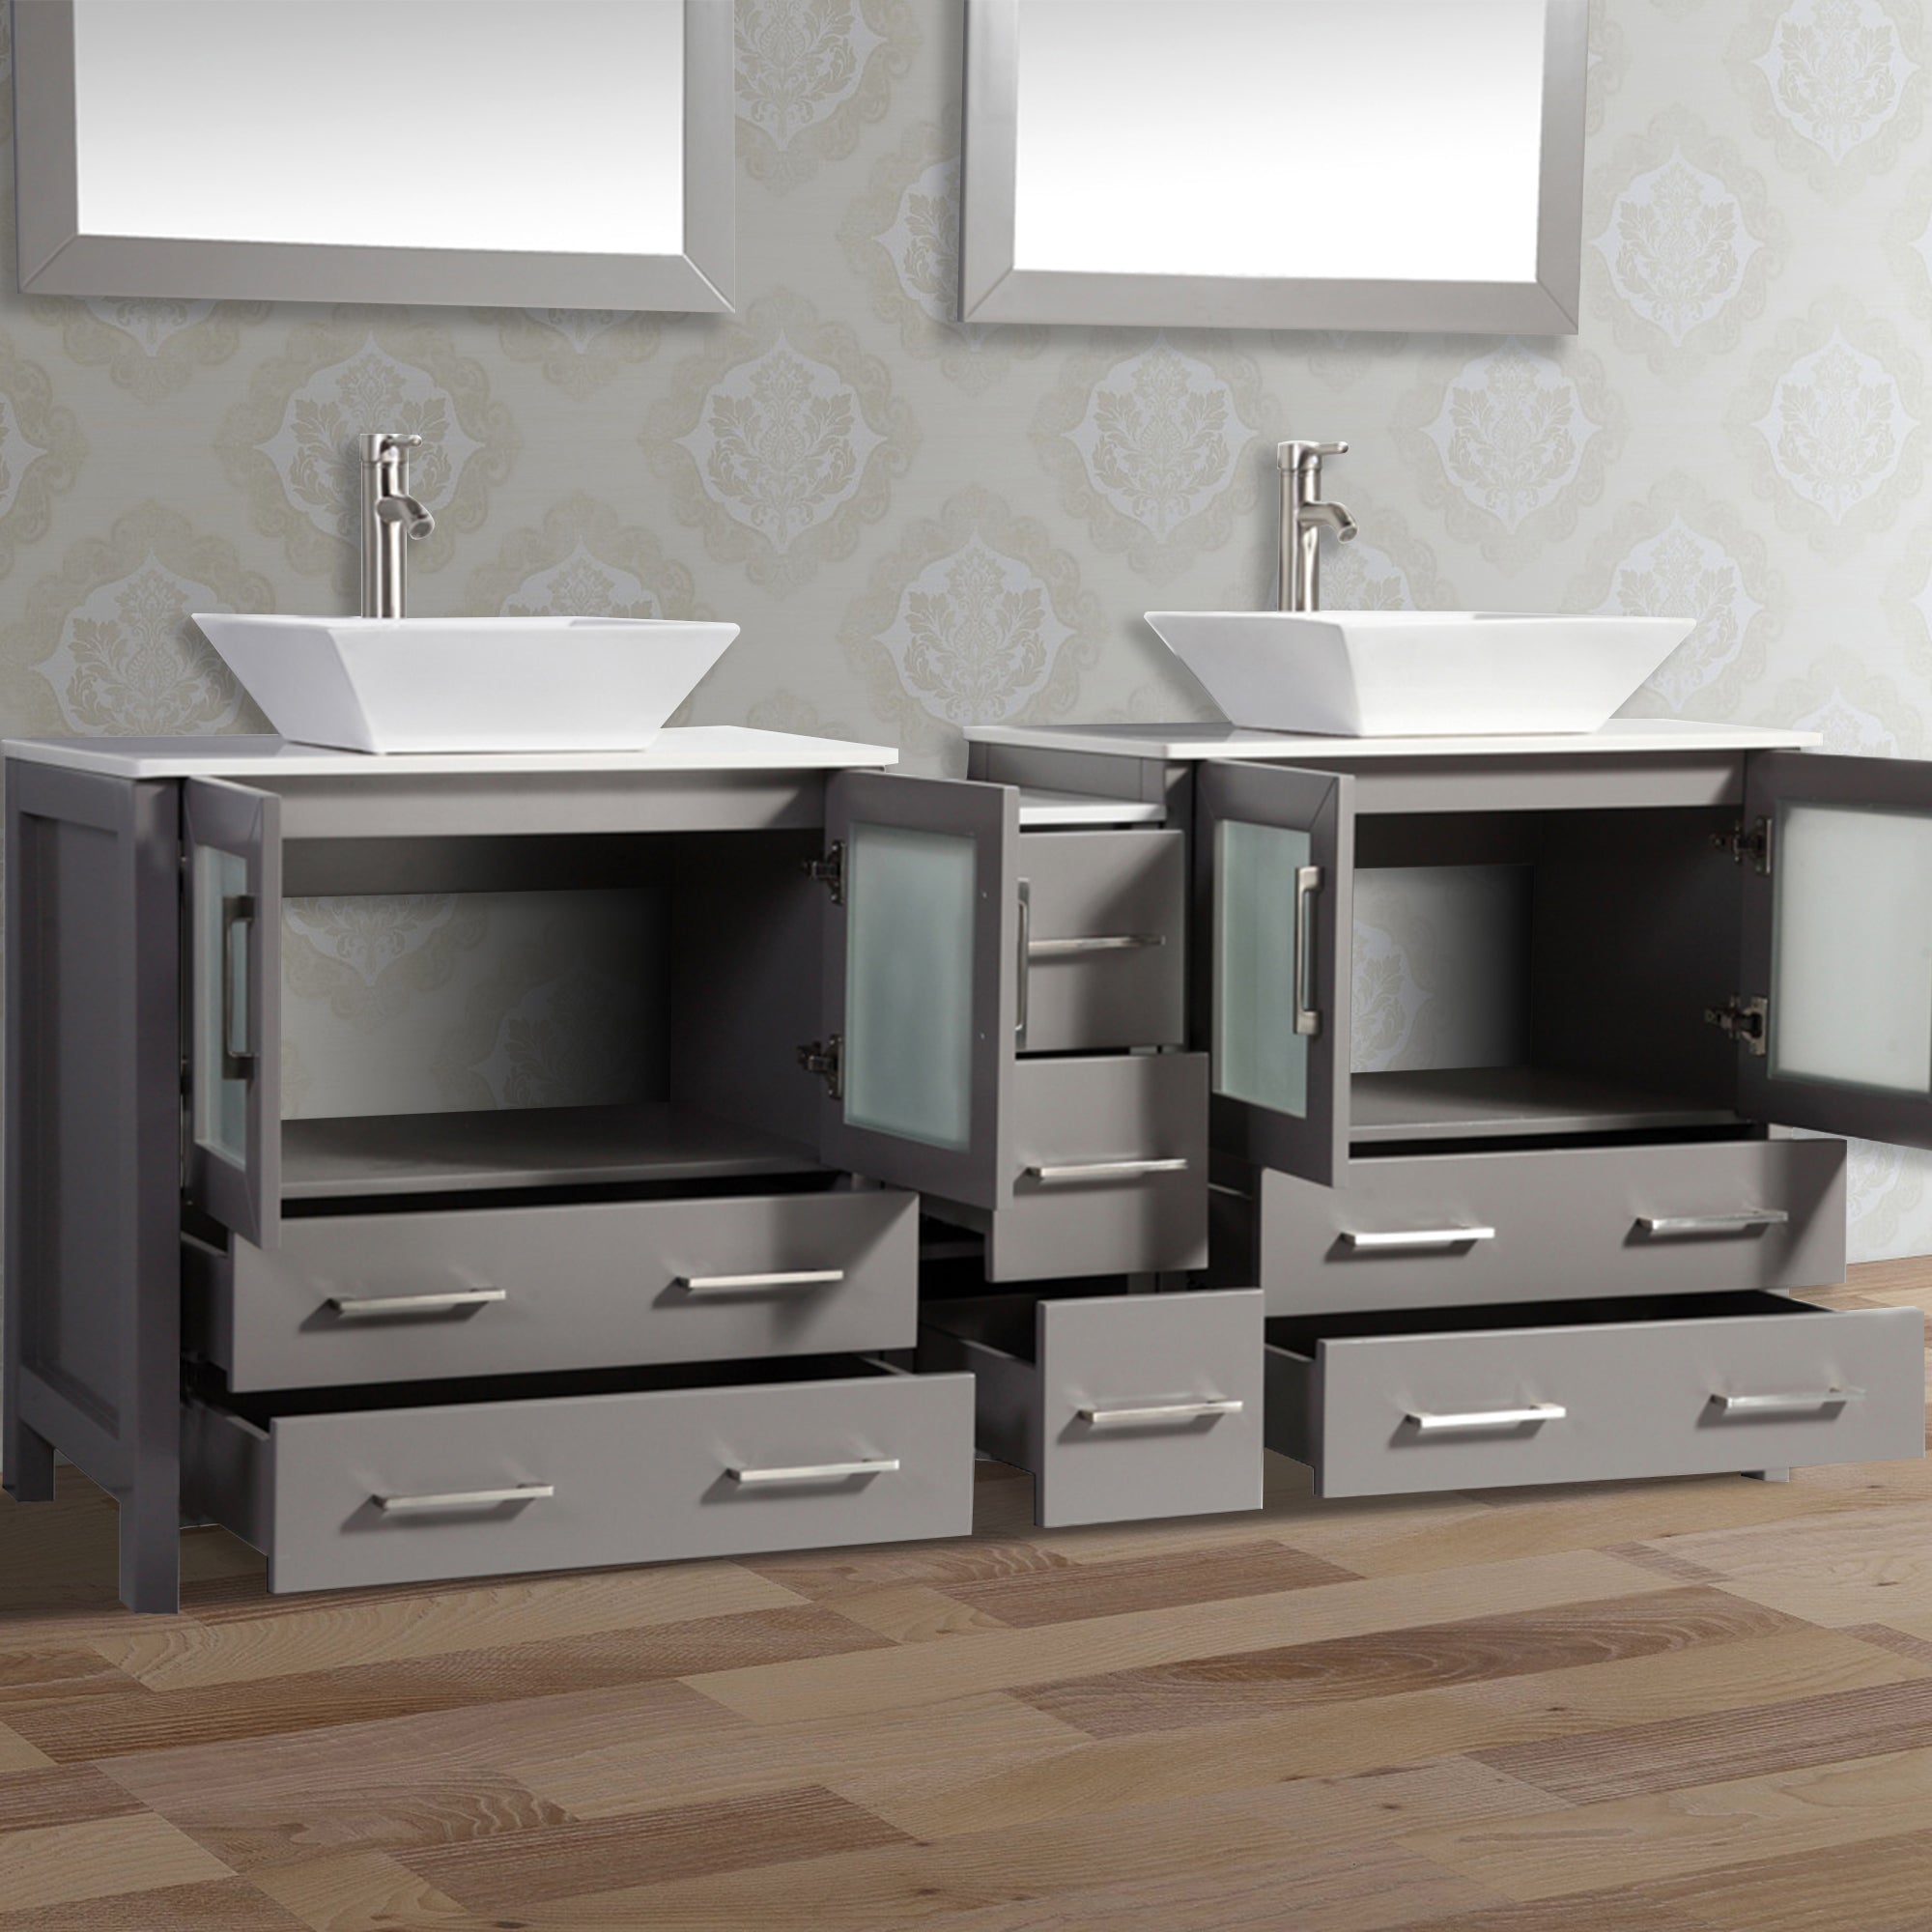 Vanity Art - Monaco 72" Double Vessel Sink Bathroom Vanity Set with Sinks and Mirrors - 1 Side Cabinet - Bhdepot 